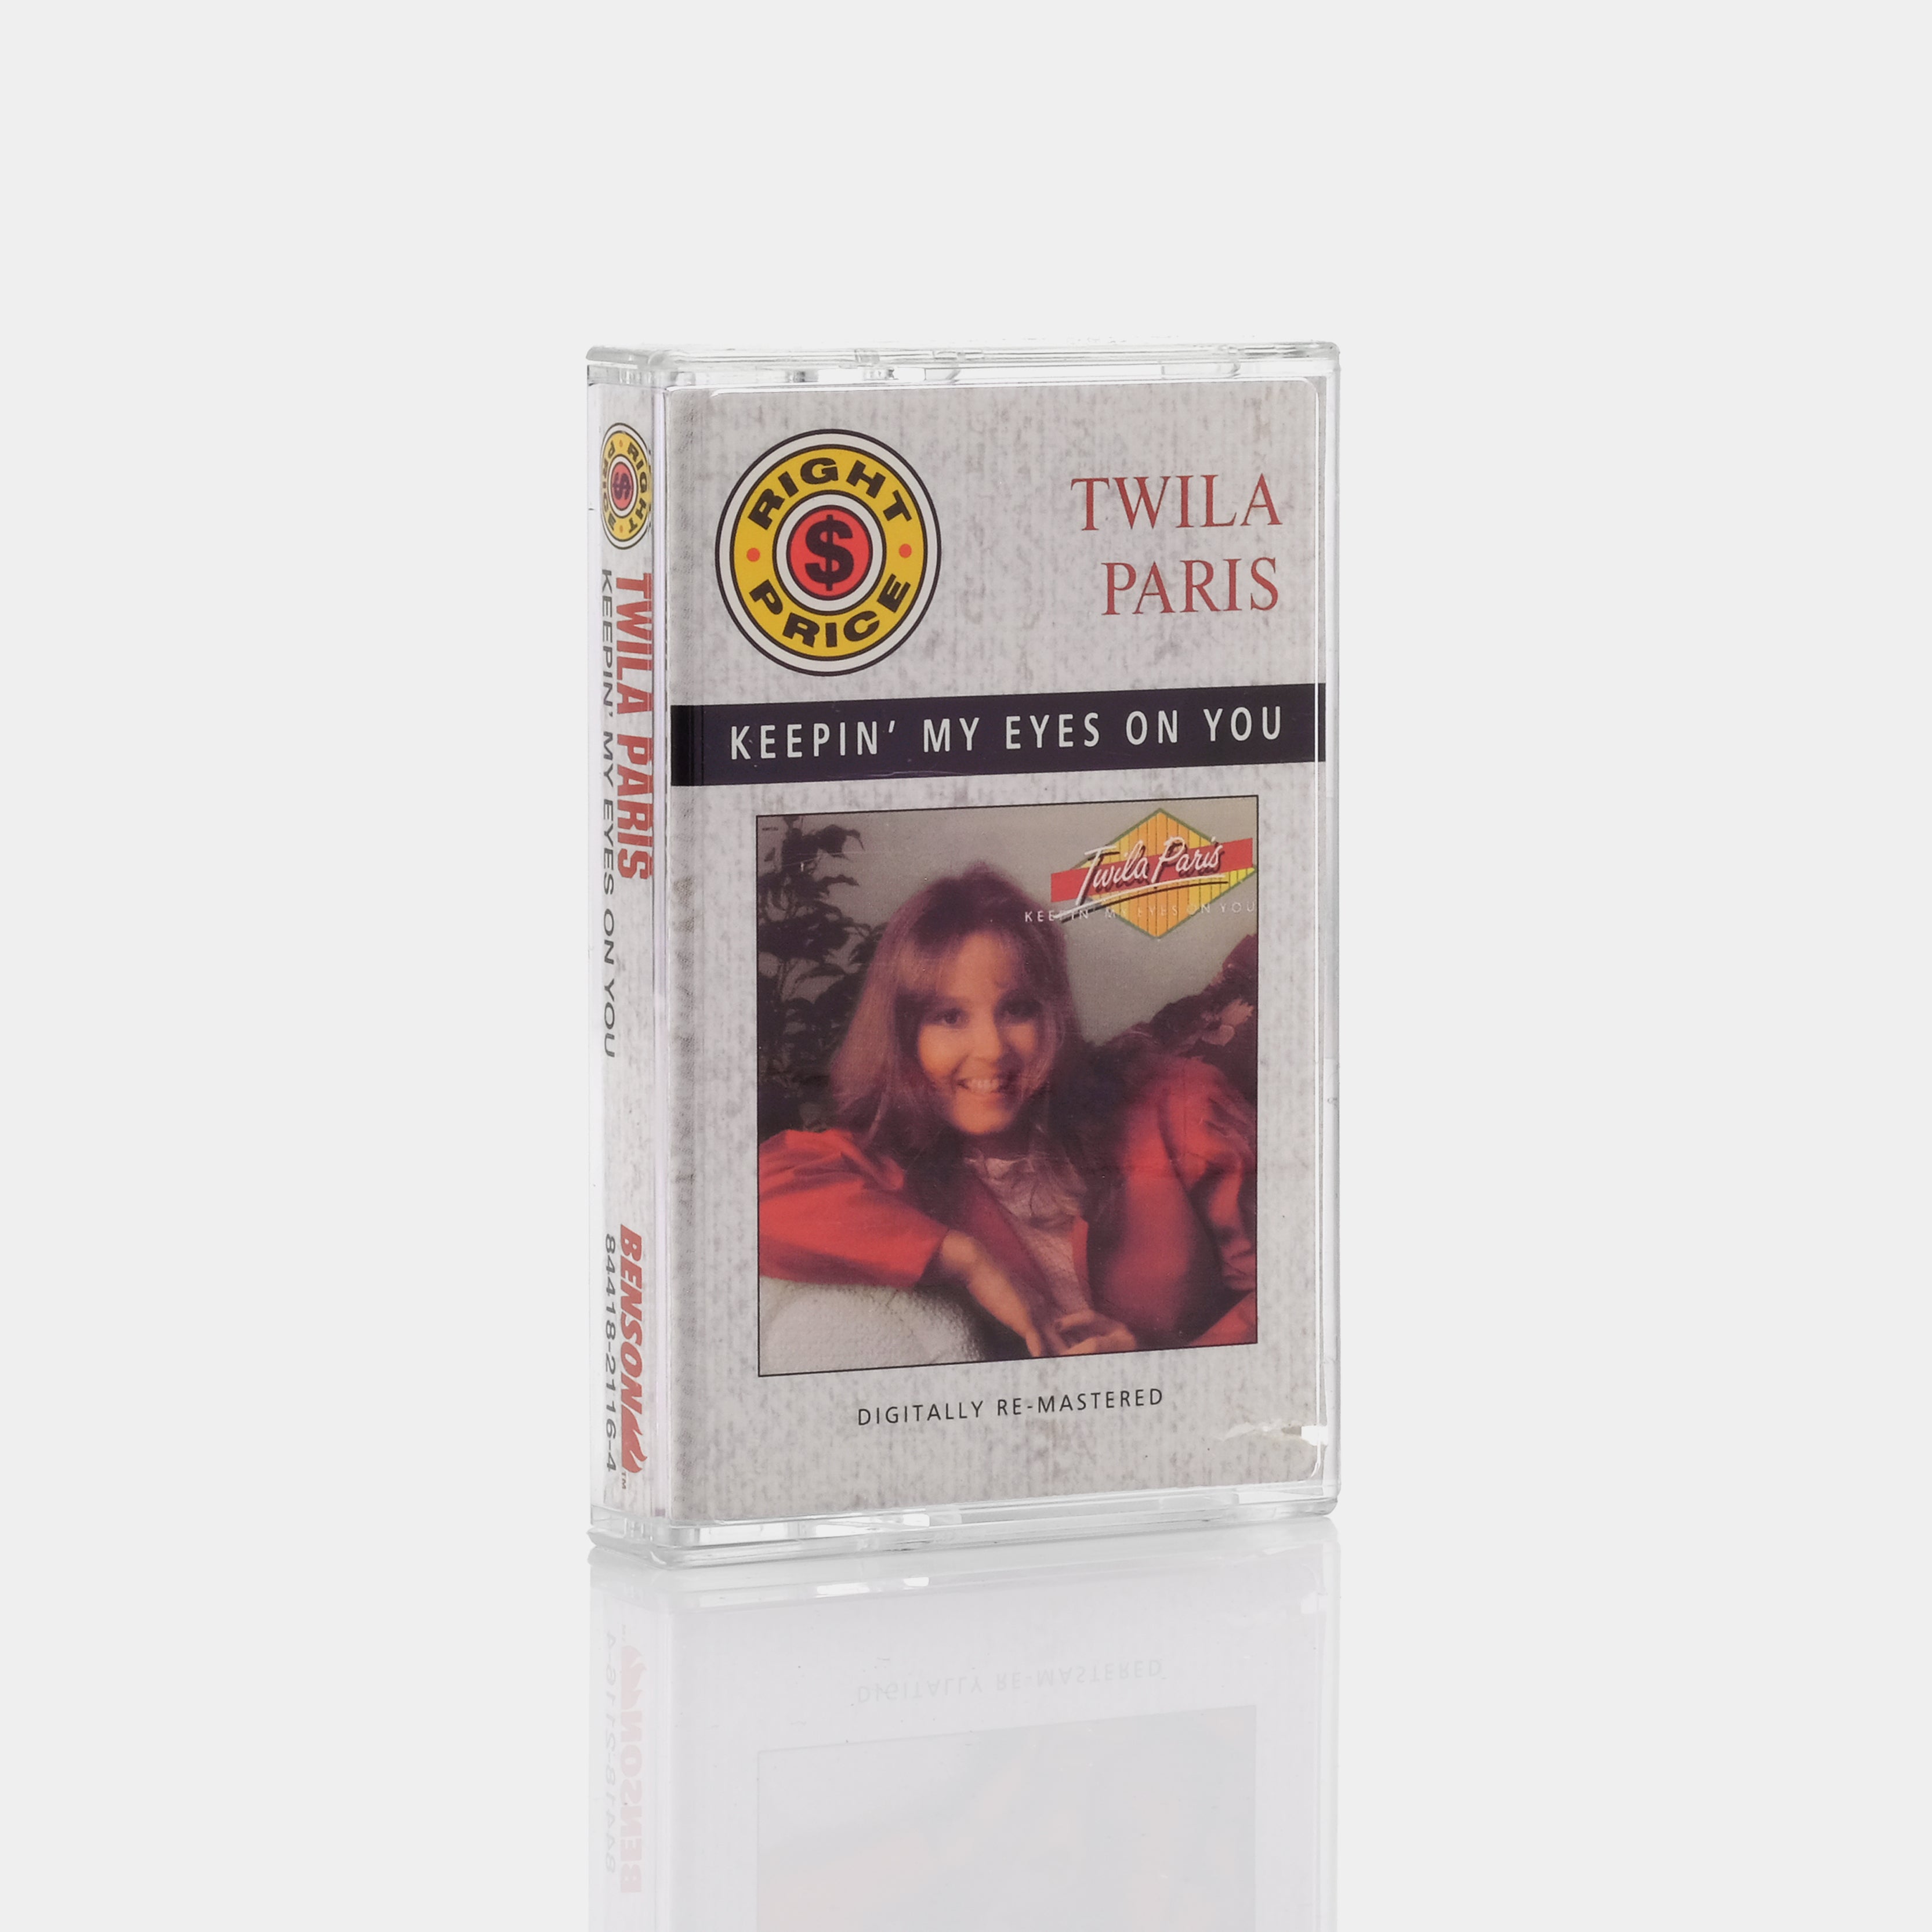 Twila Paris - Keepin' My Eyes On You Cassette Tape